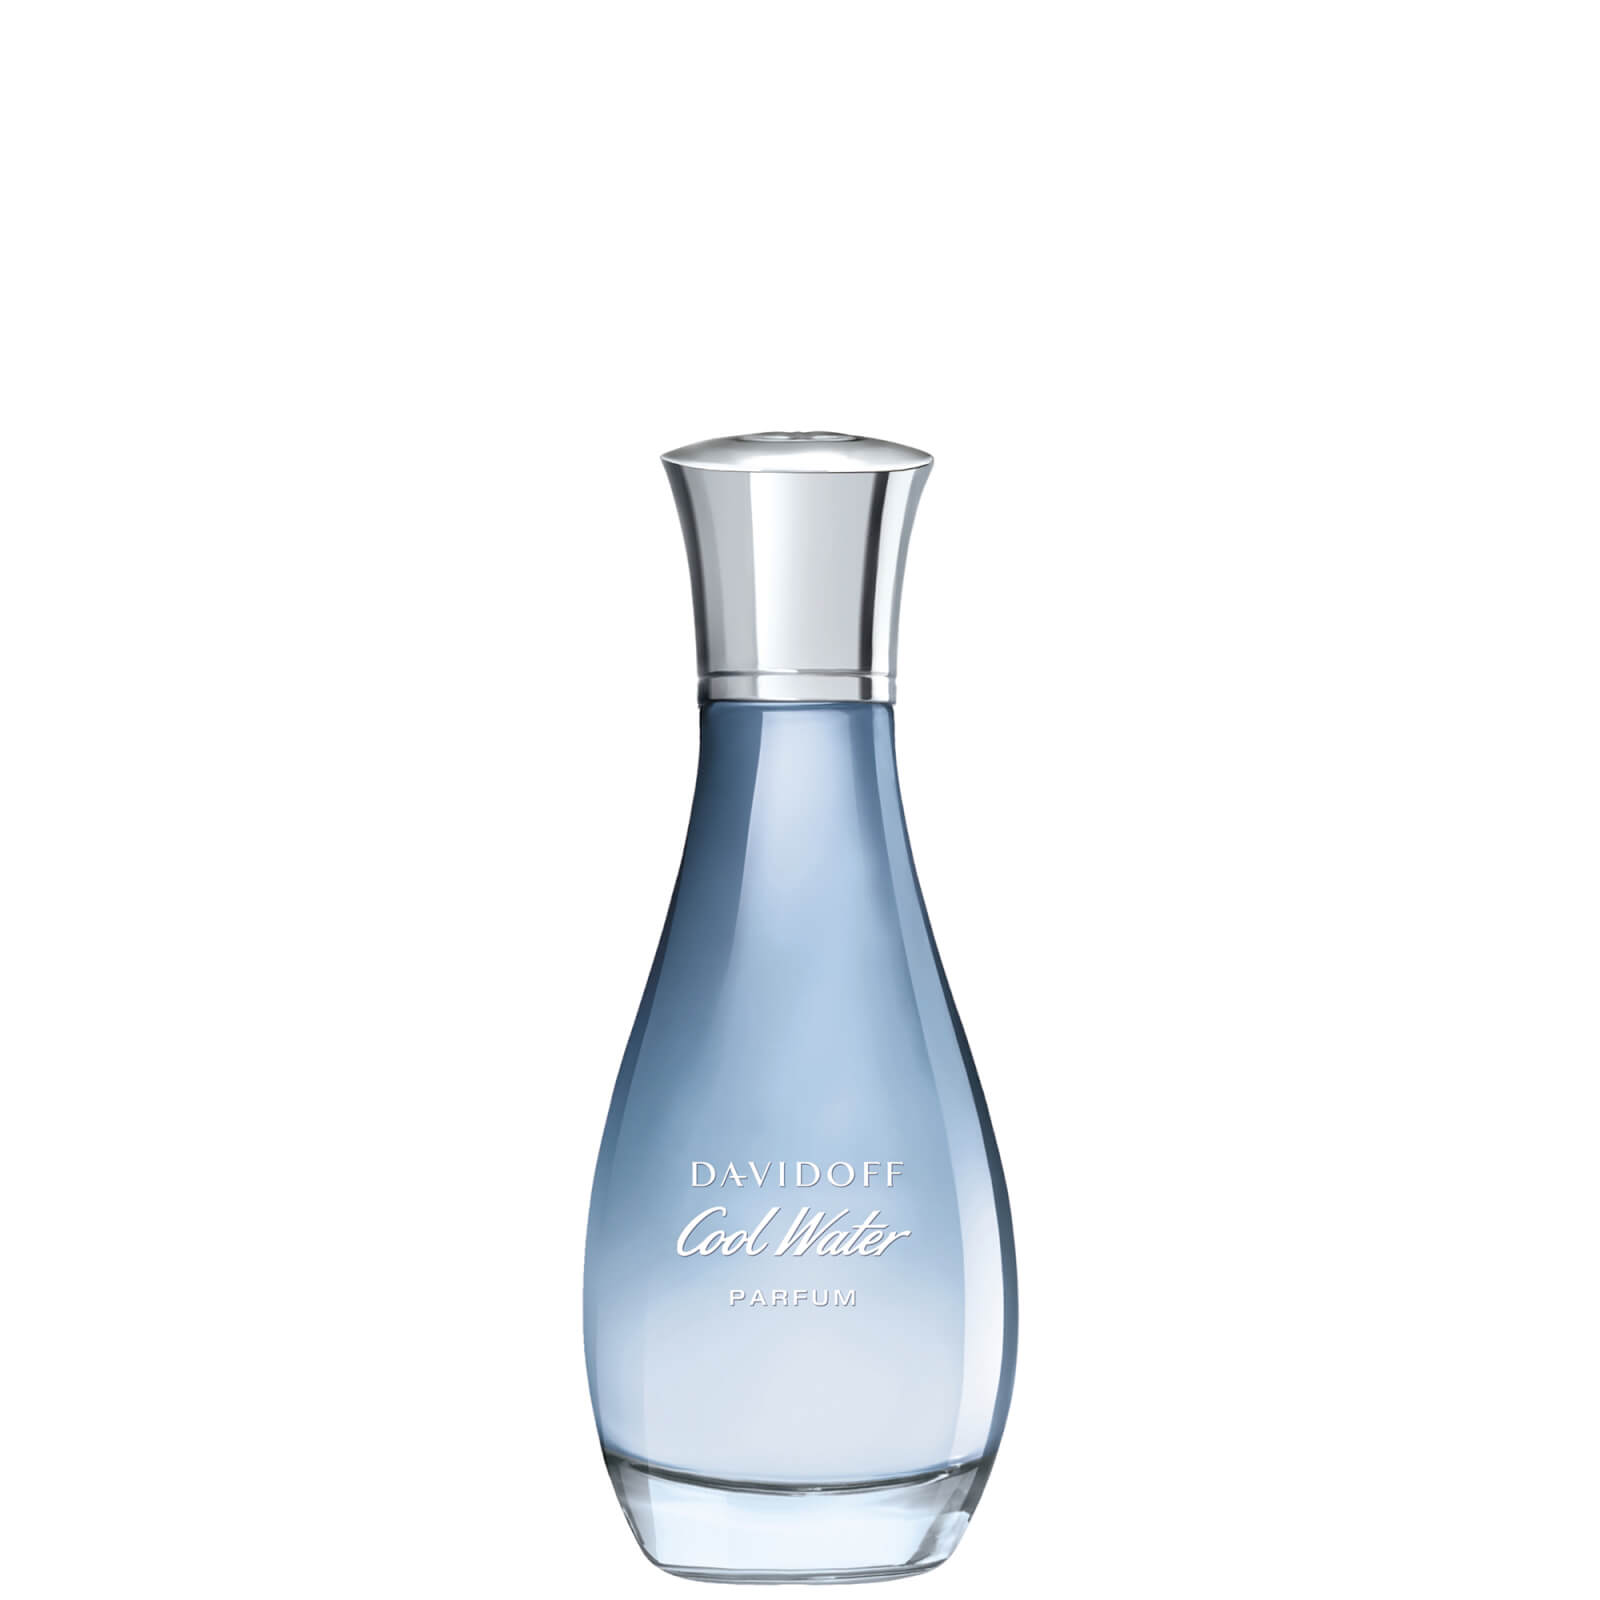 davidoff cool water odyssey eau de parfum (various sizes) - 50ml uomo